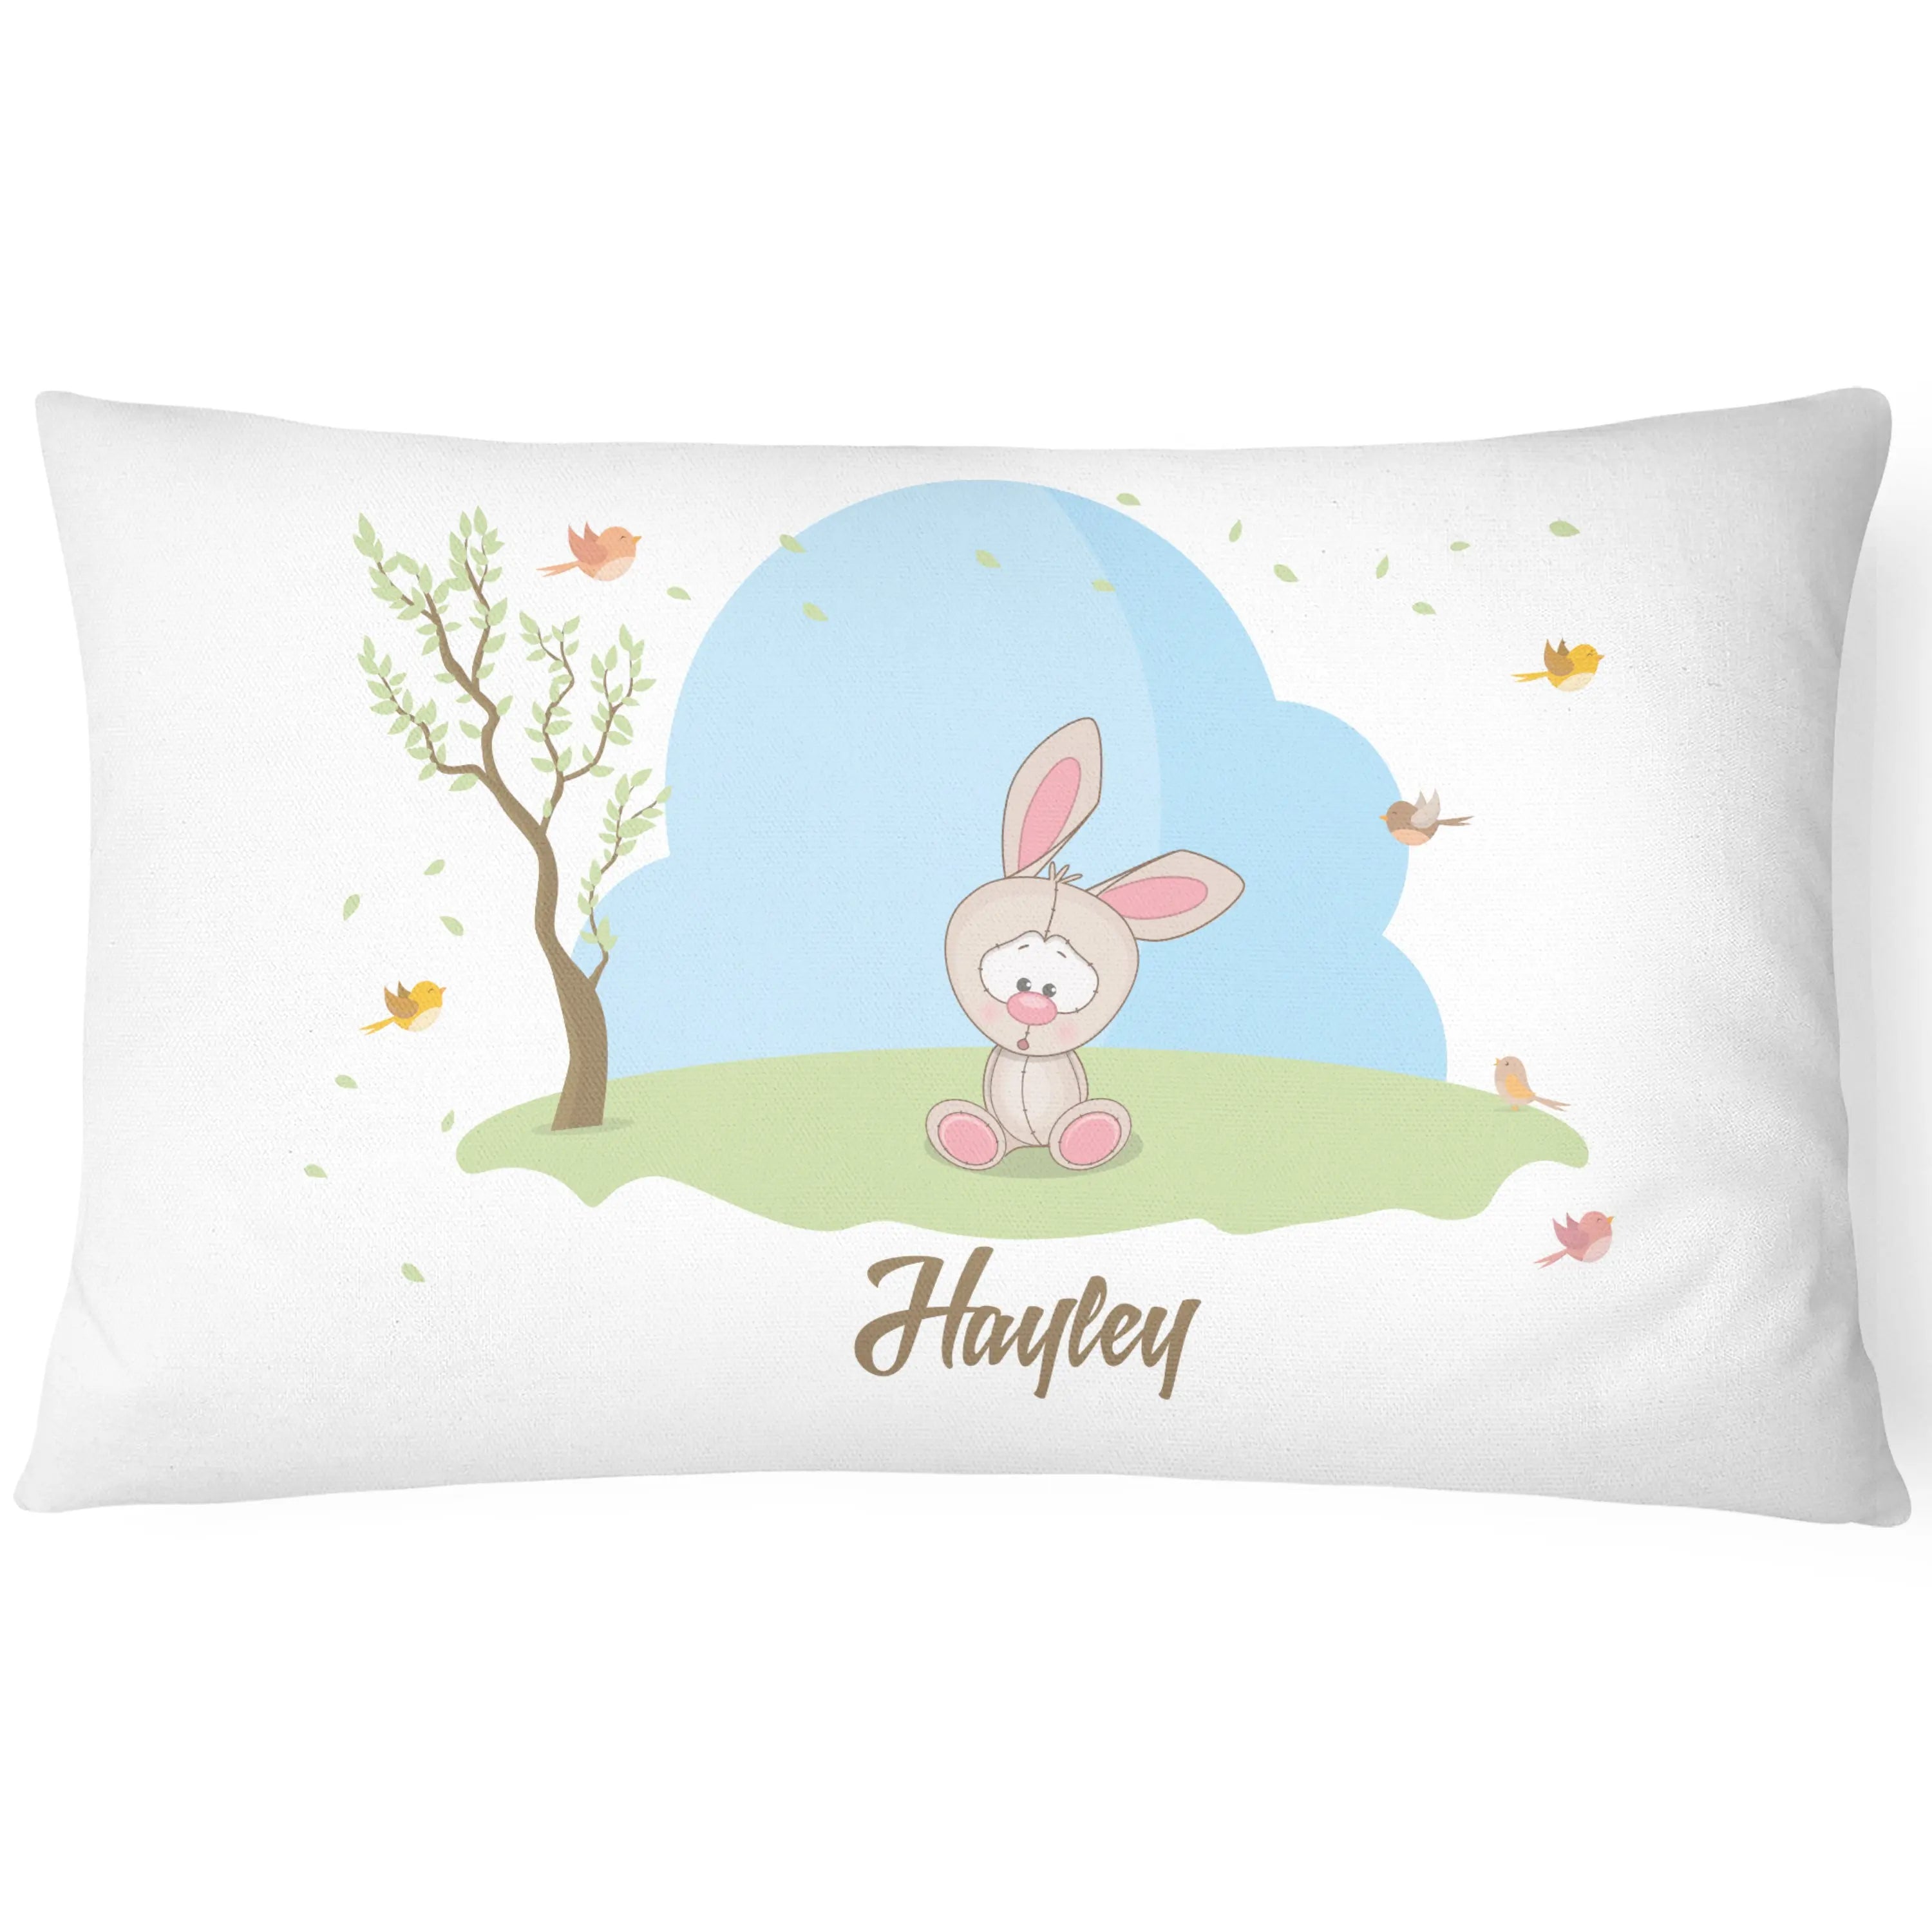 Personalised Children's Pillowcase Cute Animal - Charming - CushionPop